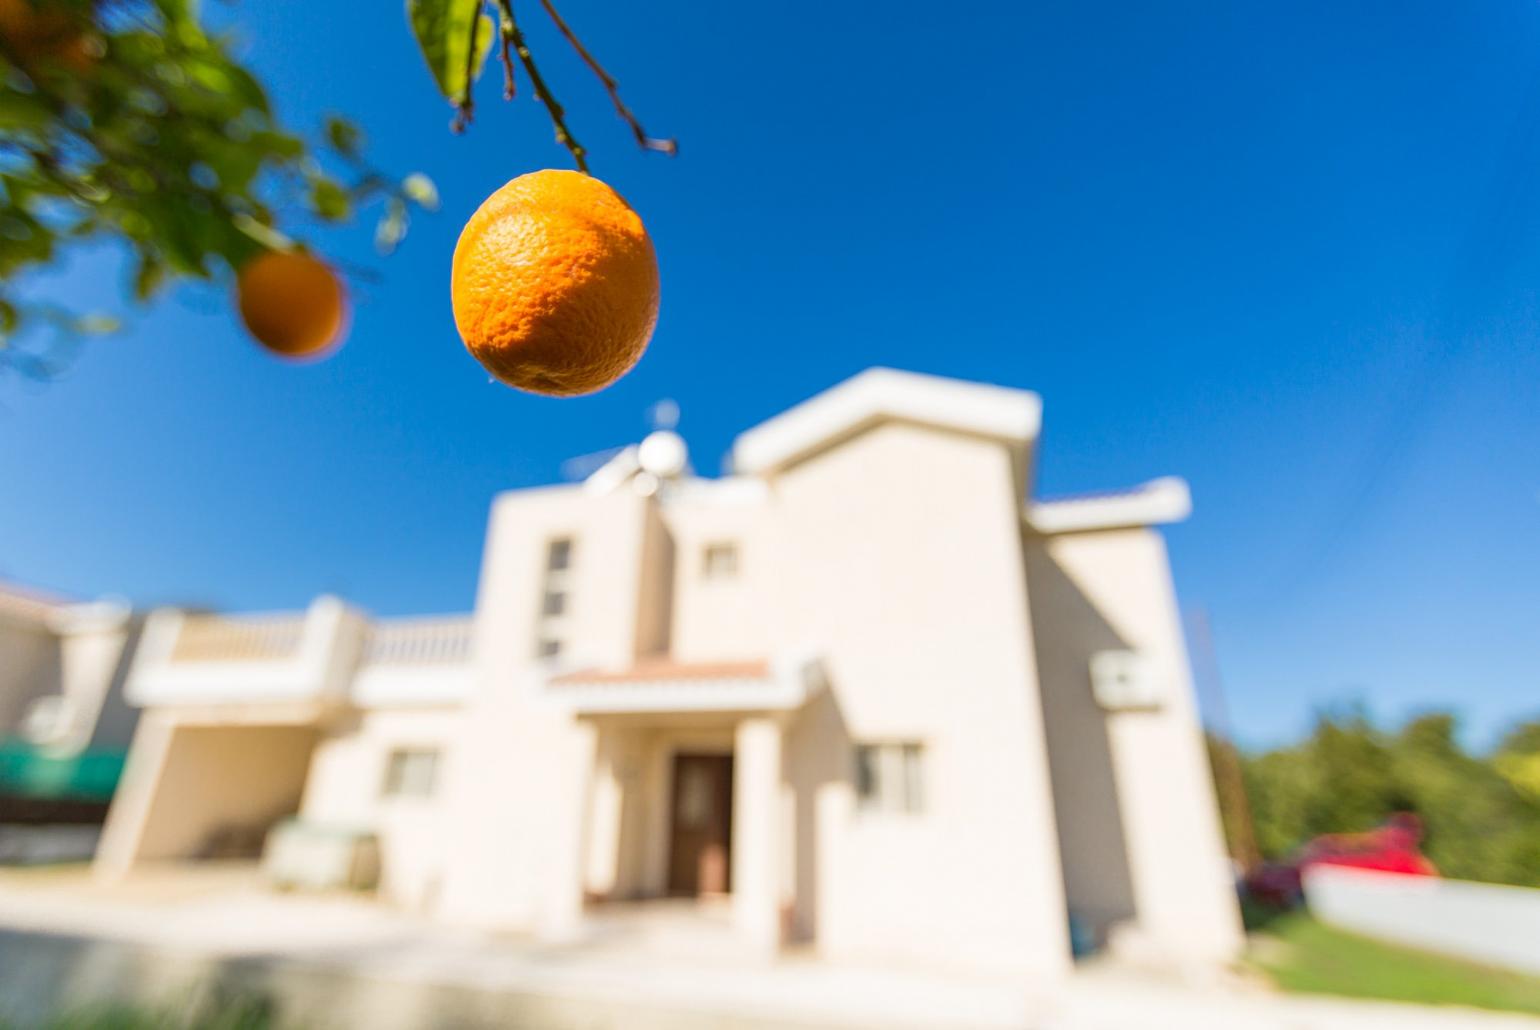 Villa Clementina orange tree 